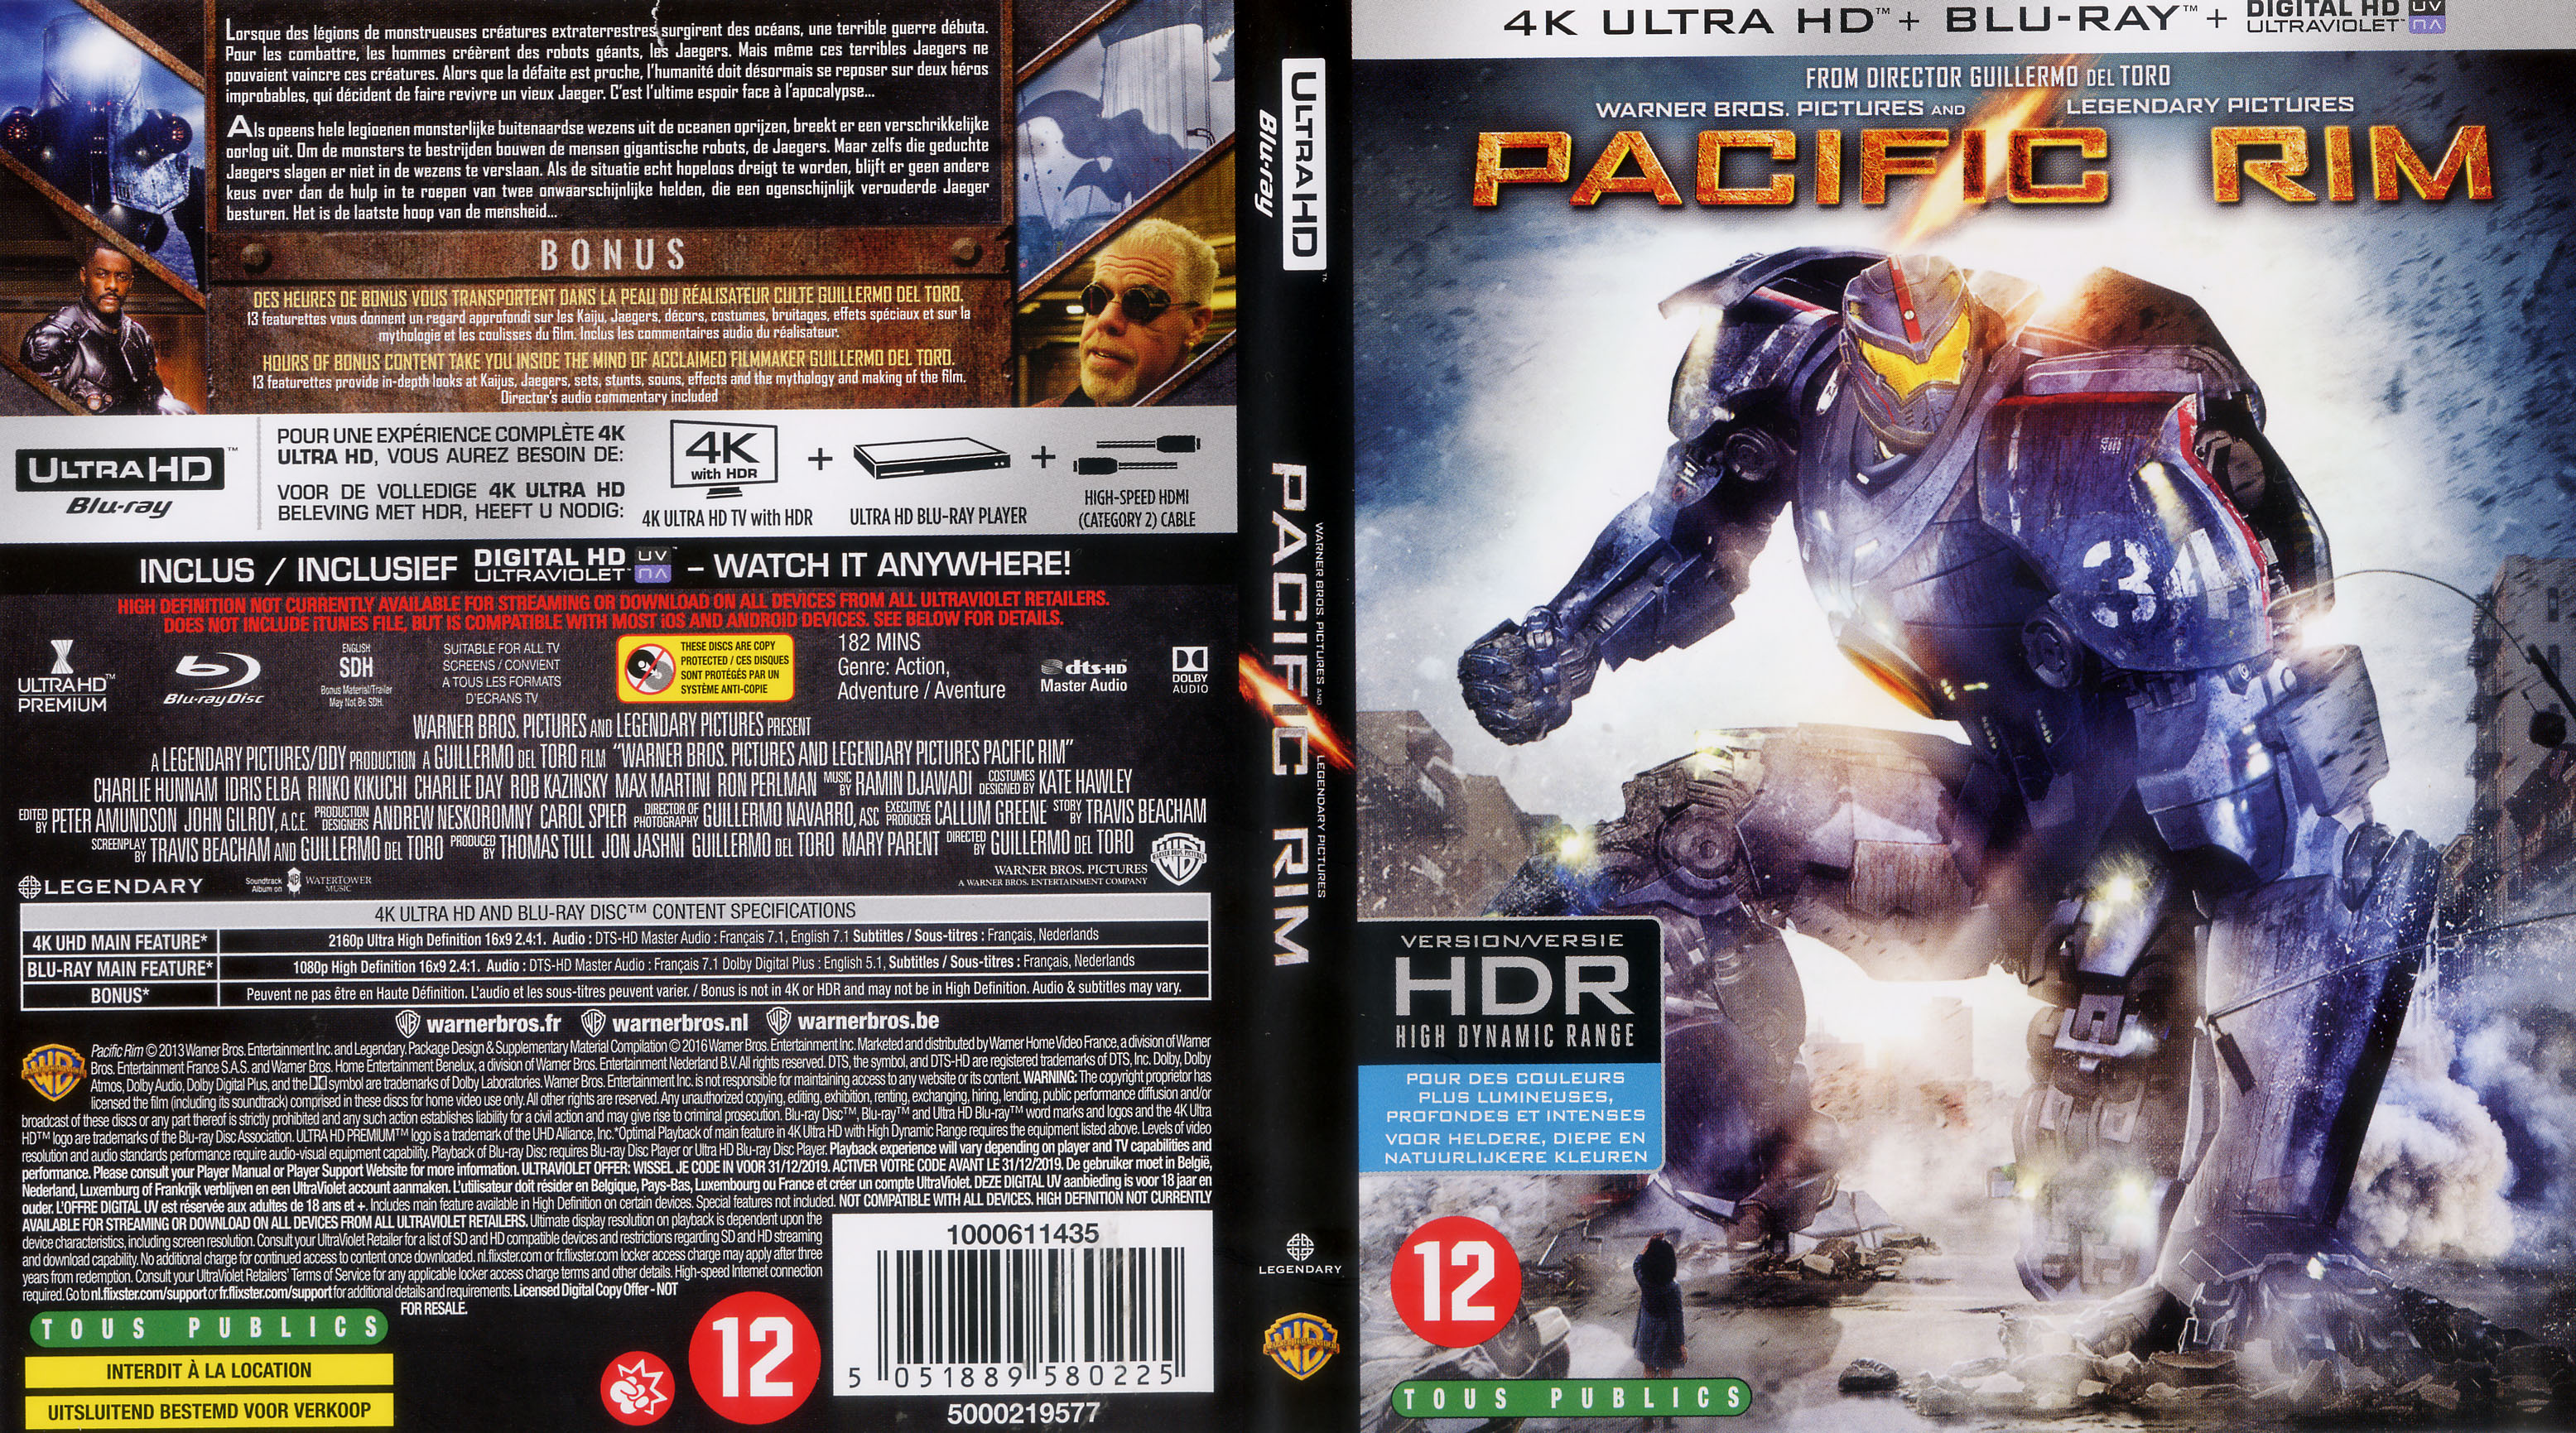 Jaquette DVD Pacific Rim 4K (BLU-RAY)